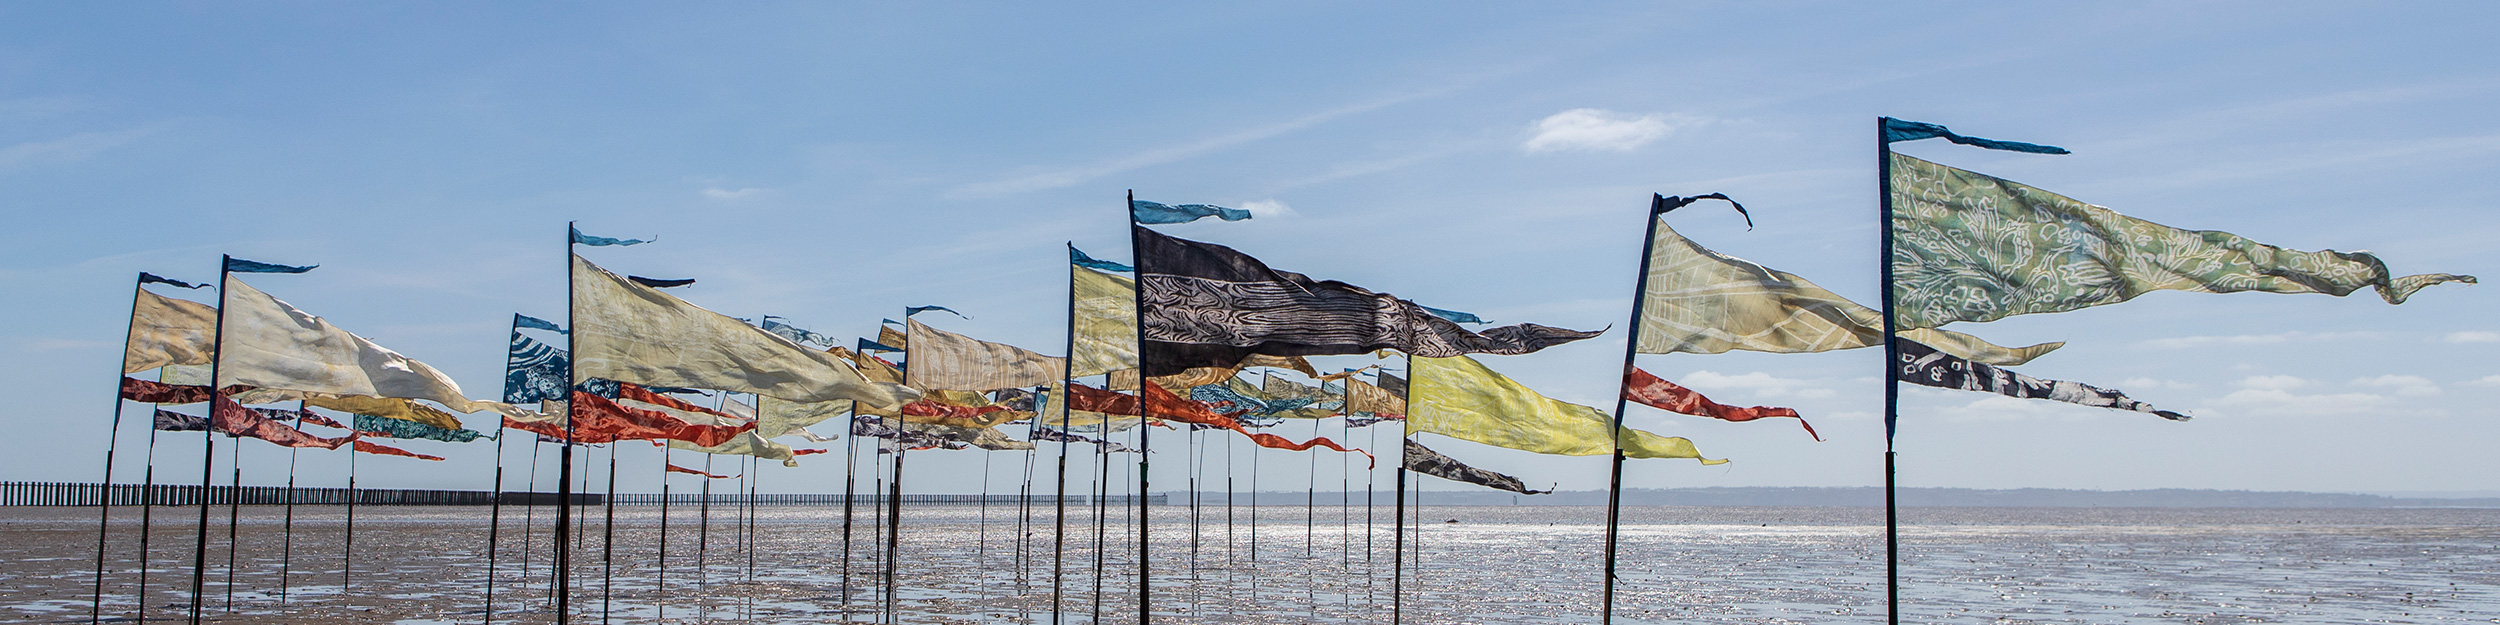 Beach of Dreams flags on Shoeburyness beach